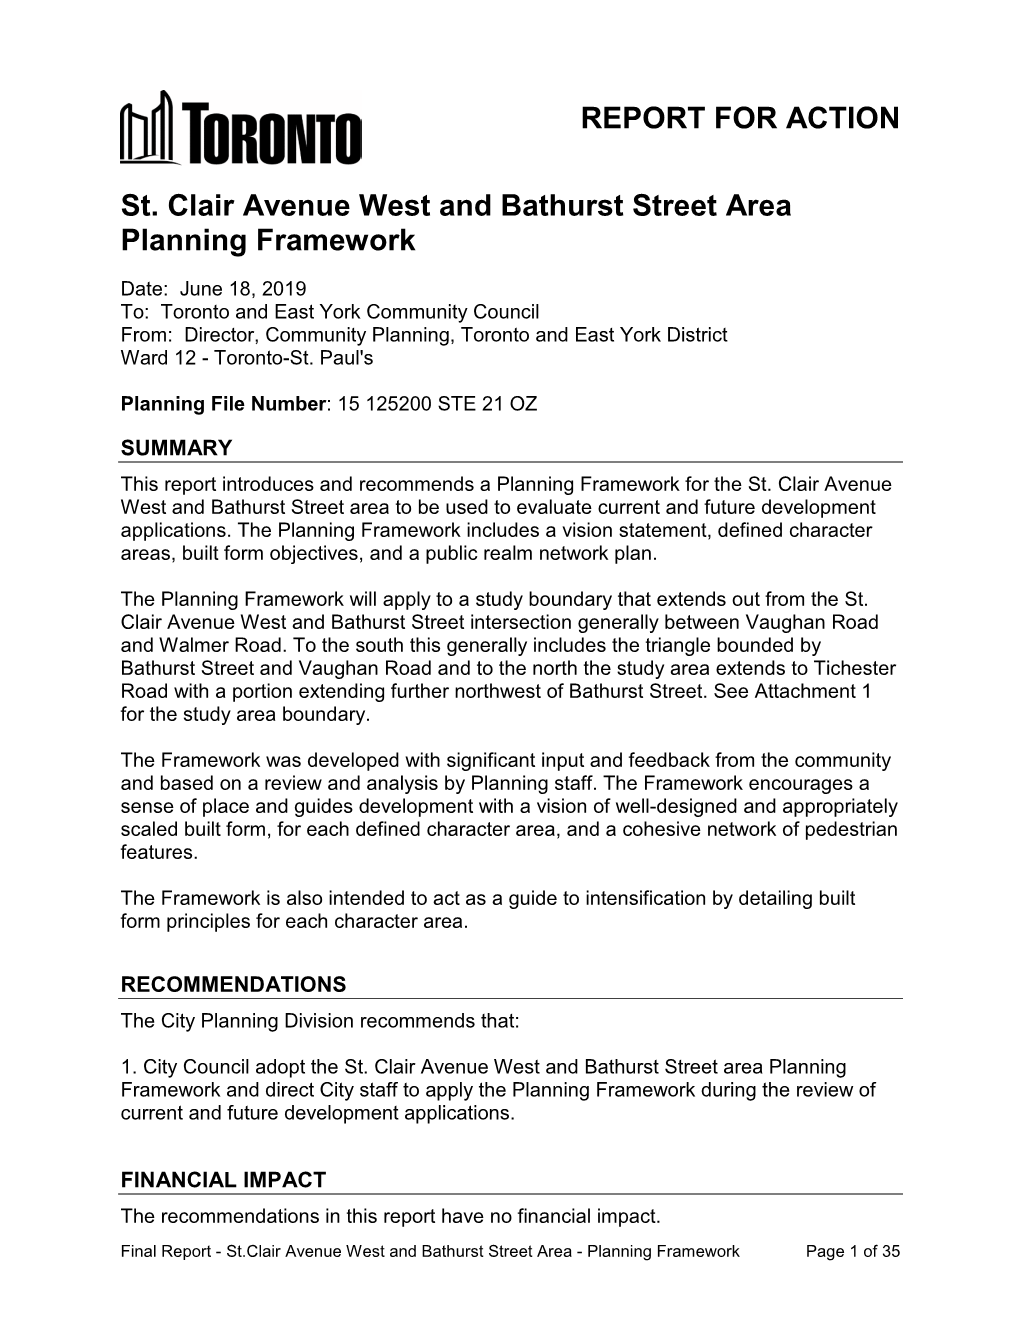 St. Clair Avenue West and Bathurst Street Area Planning Framework